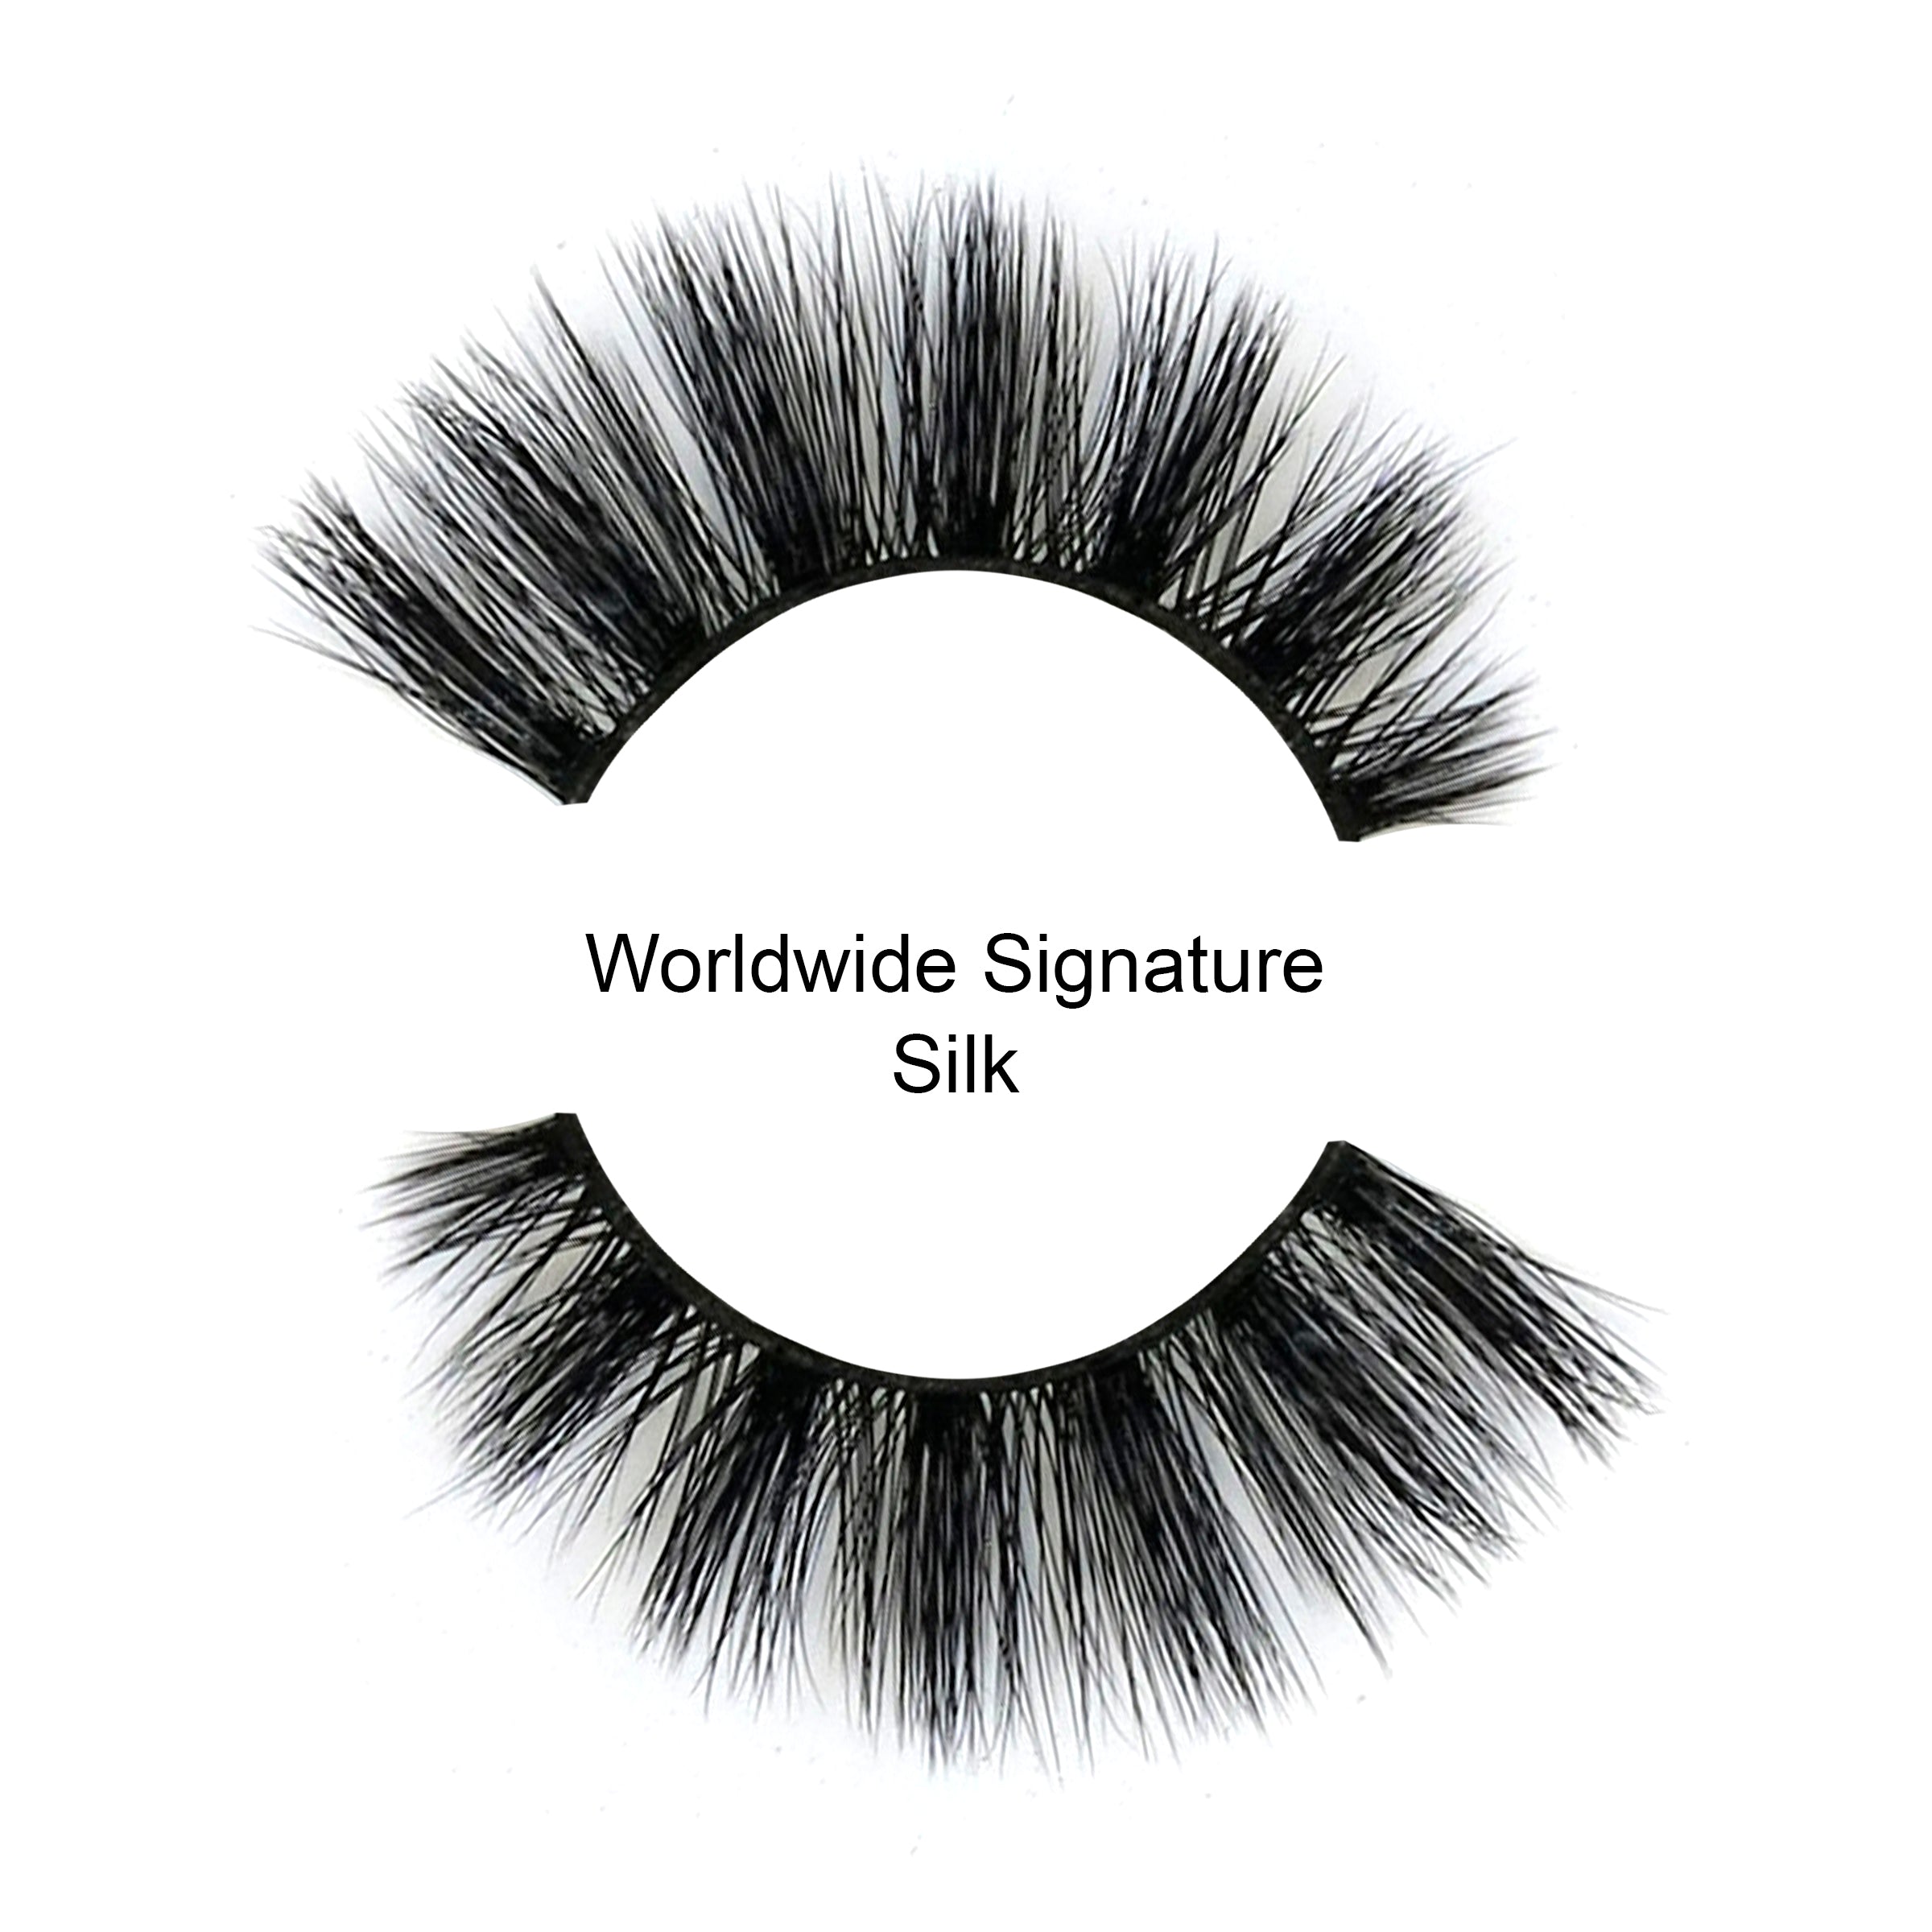 Worldwide Signature | Silk